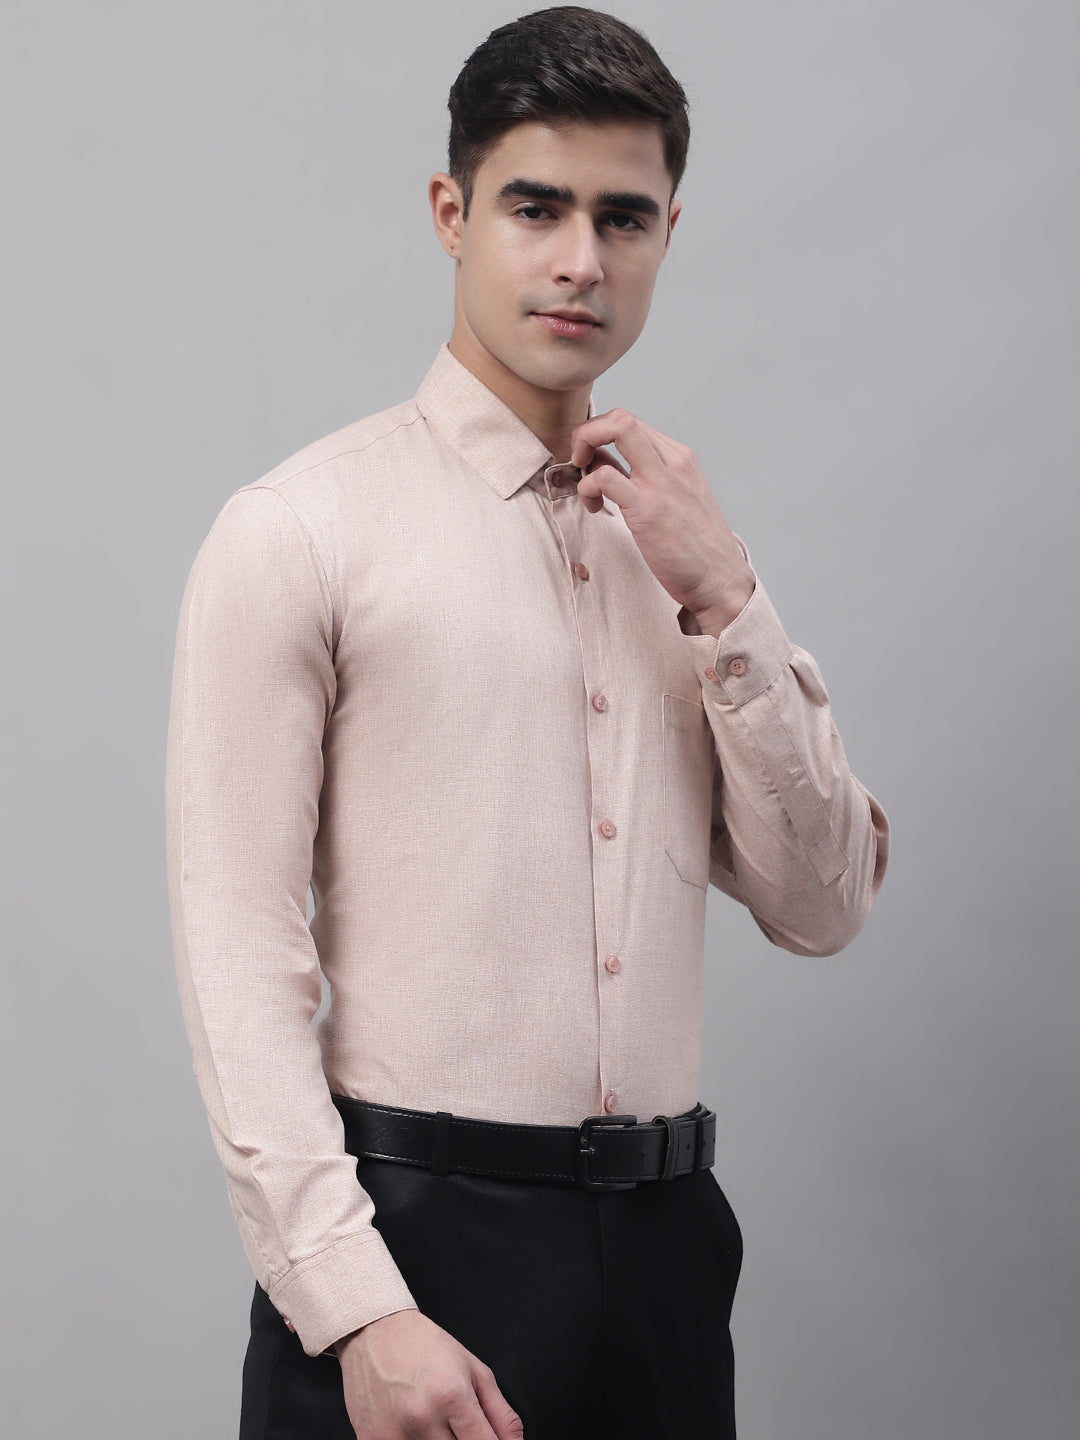 Men's Light-Brown Cotton Solid Formal Shirt